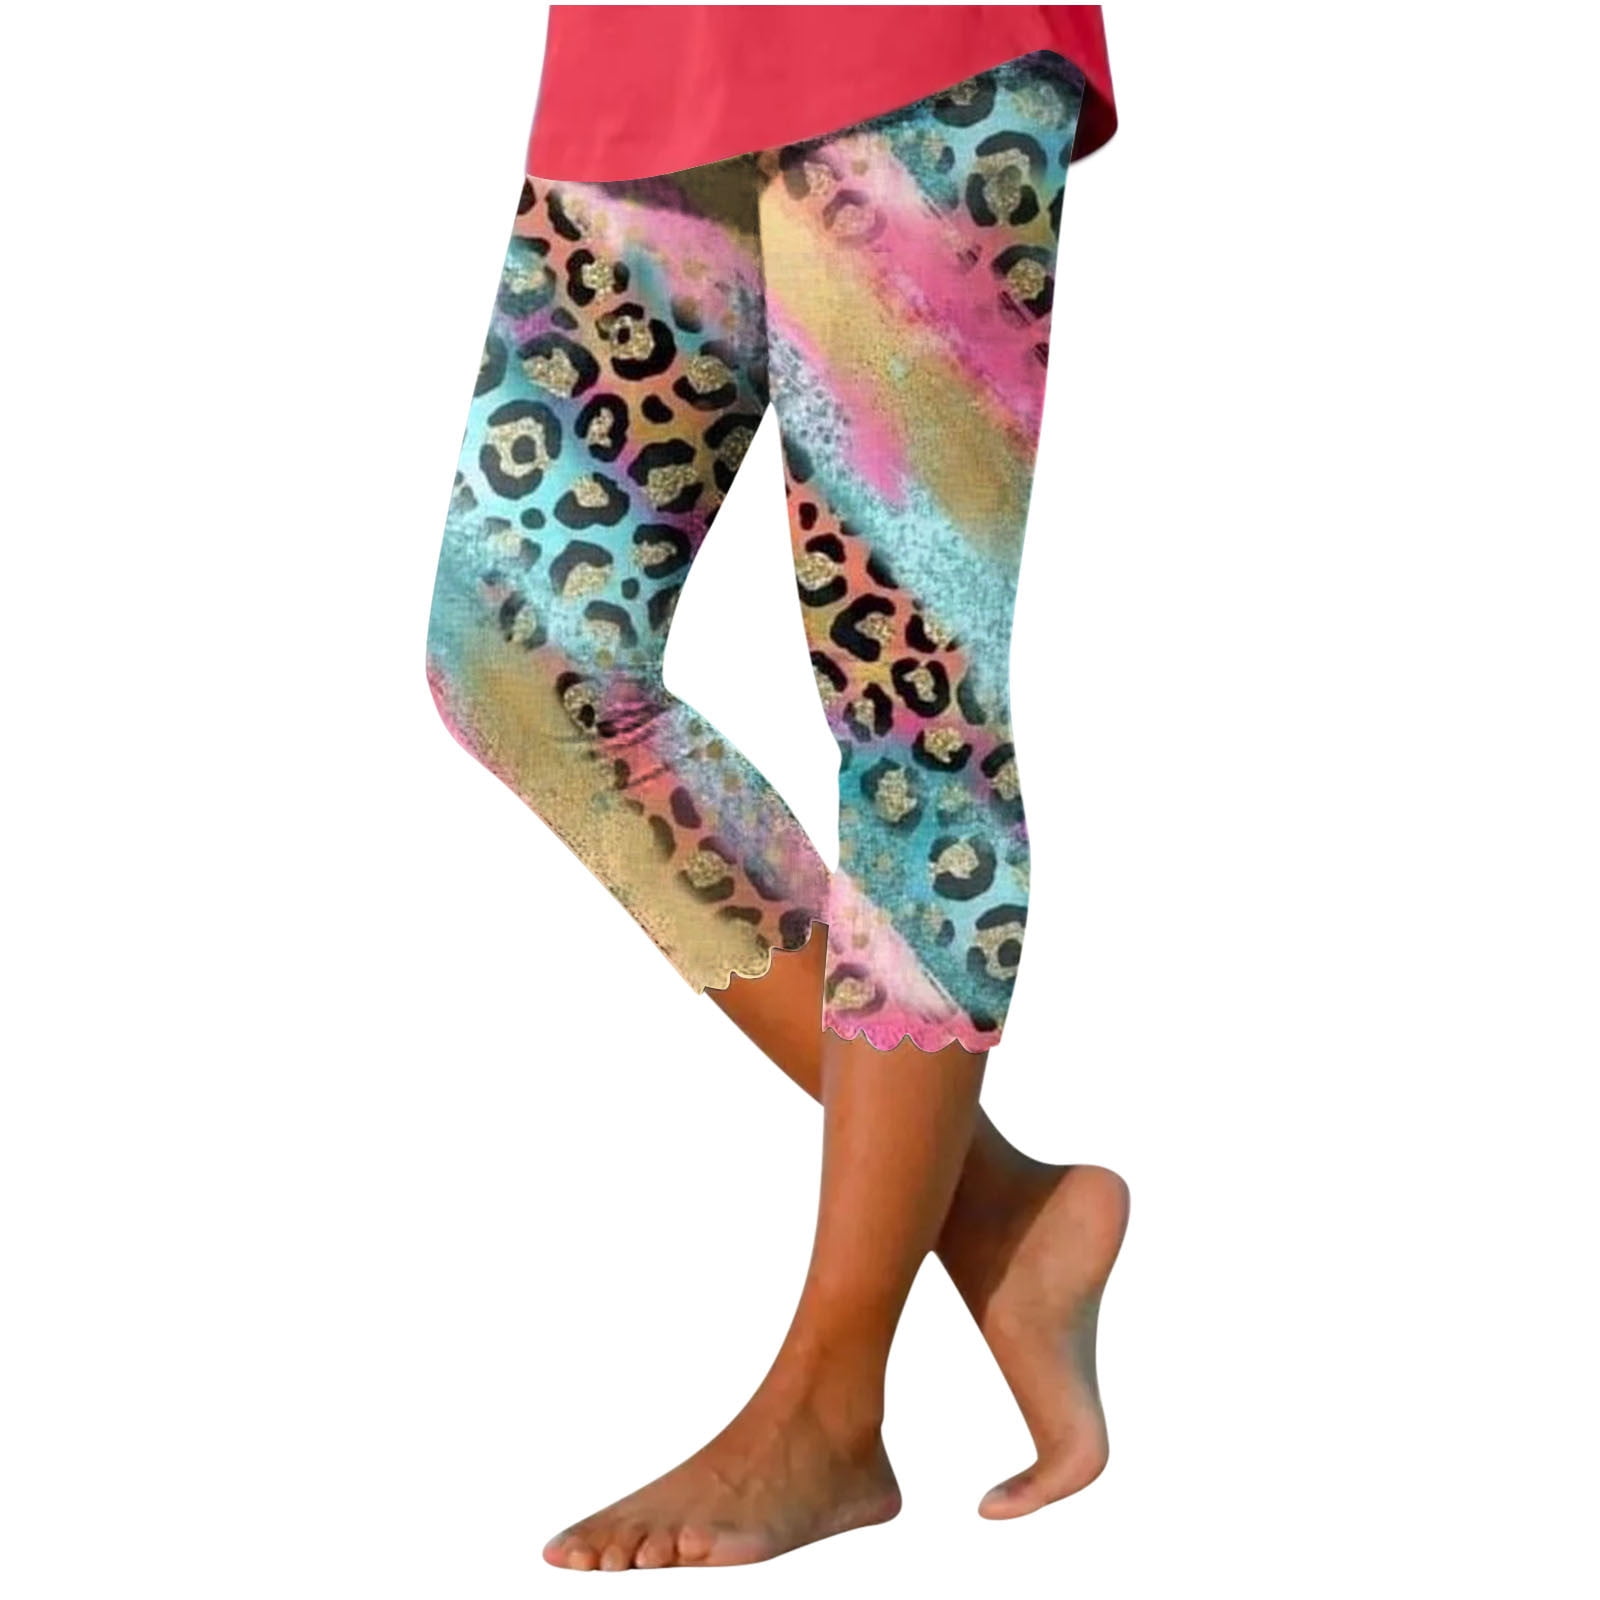 Ladies Stretch Capri Leggings Under Tunic Tops and Dress Graphic Printed Beach Capris Cropped Pants Underpants XX Large Mint Green e64bd3c6 a268 482e b4c2 9120232b60b8.fb2e14cd968cb5bb2a2d1f6352fa0bd8